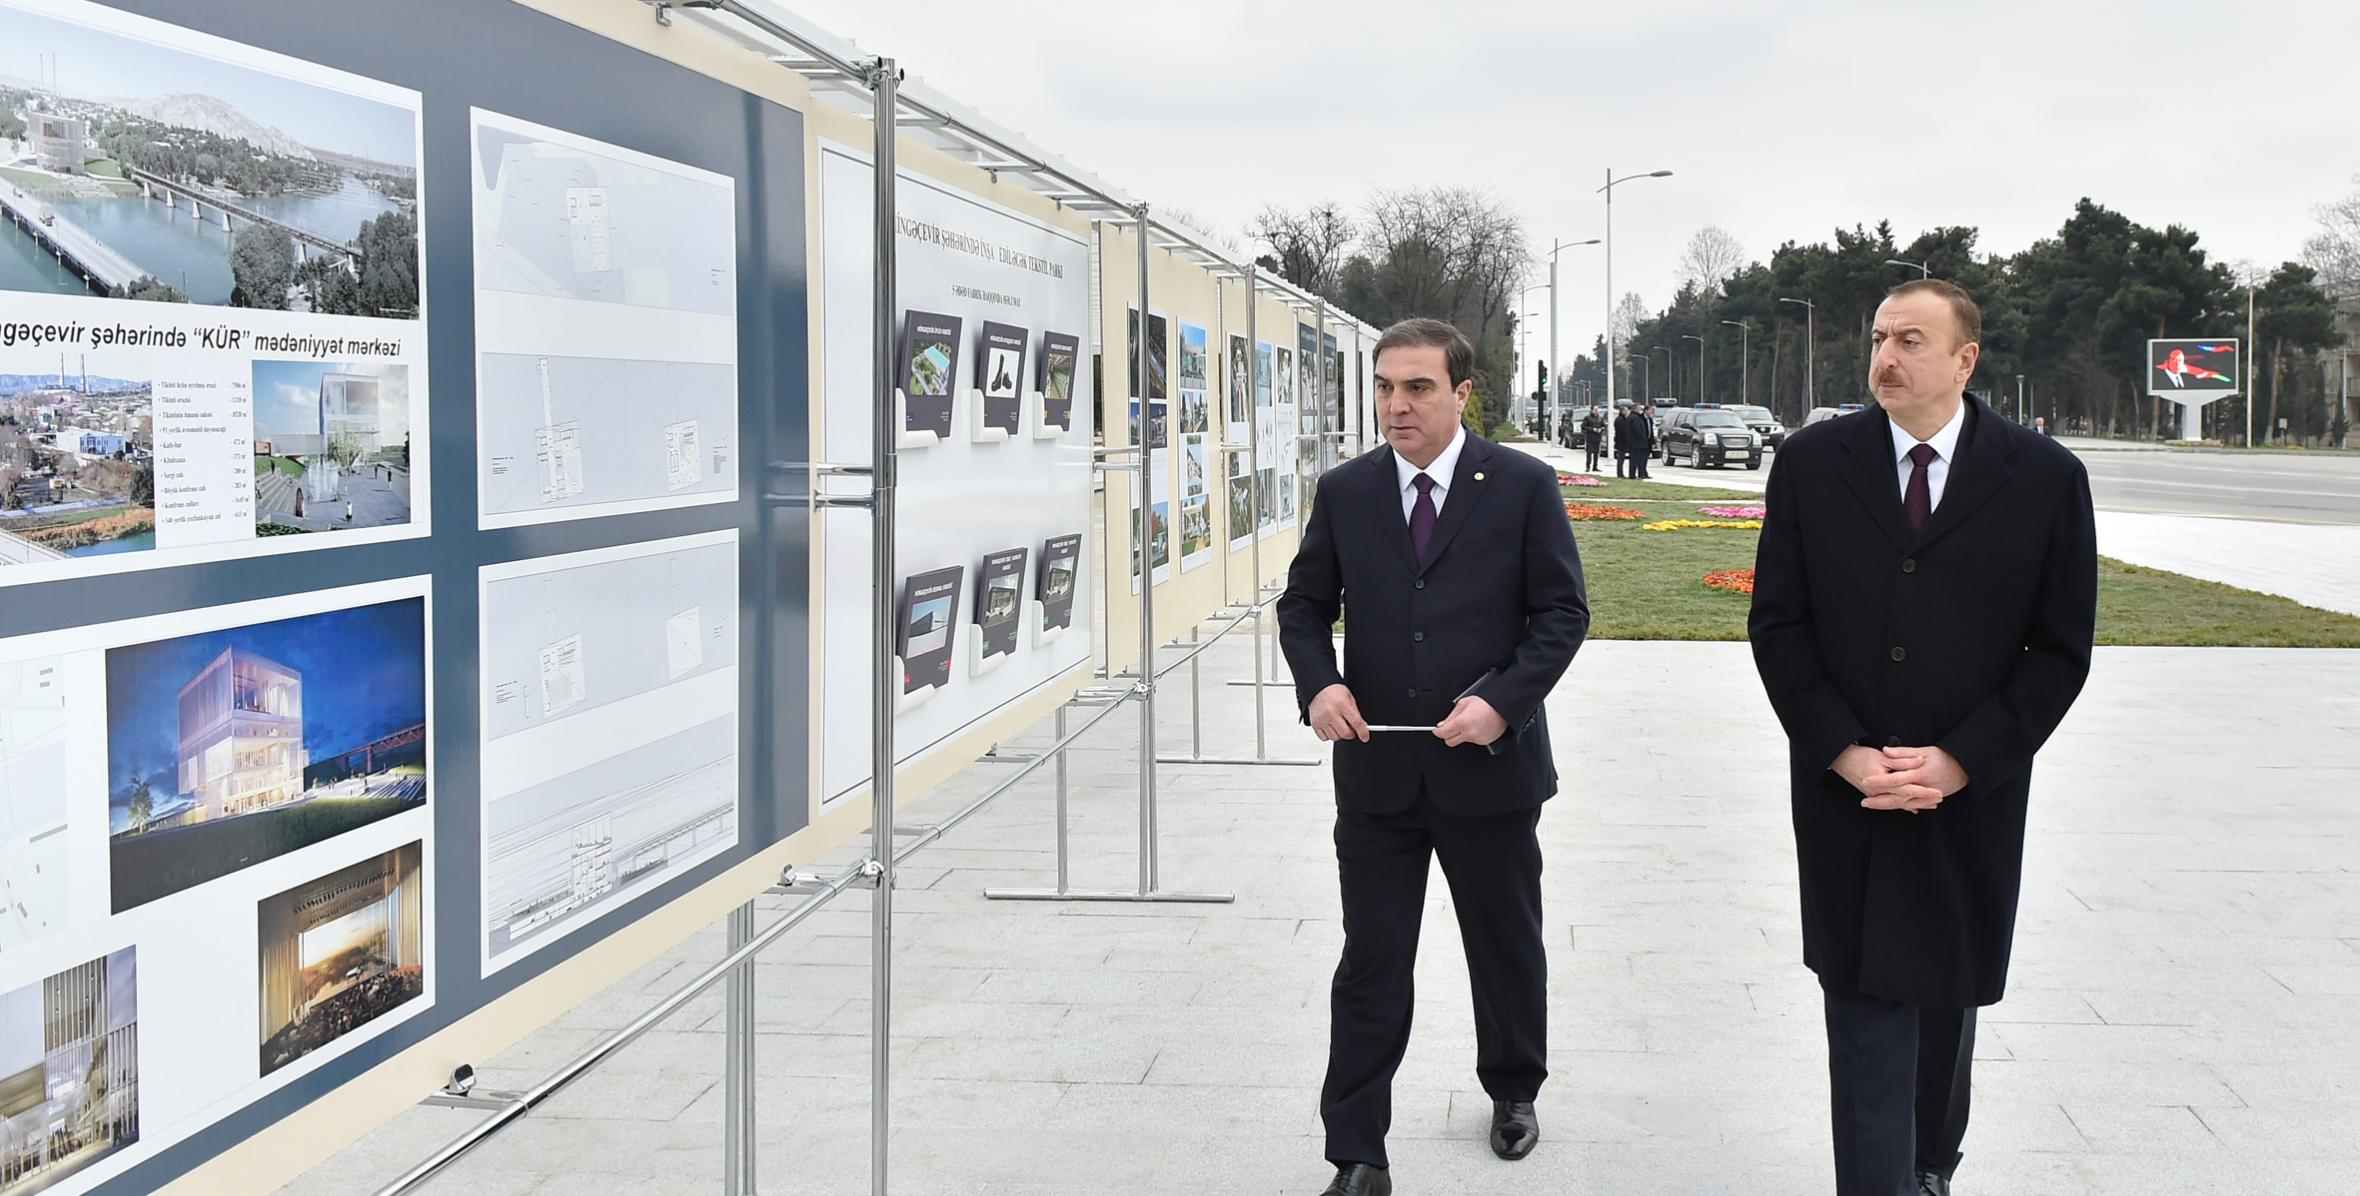 Ilham Aliyev reviewed the ongoing redevelopment work at the Heydar Aliyev Park in Mingachevir